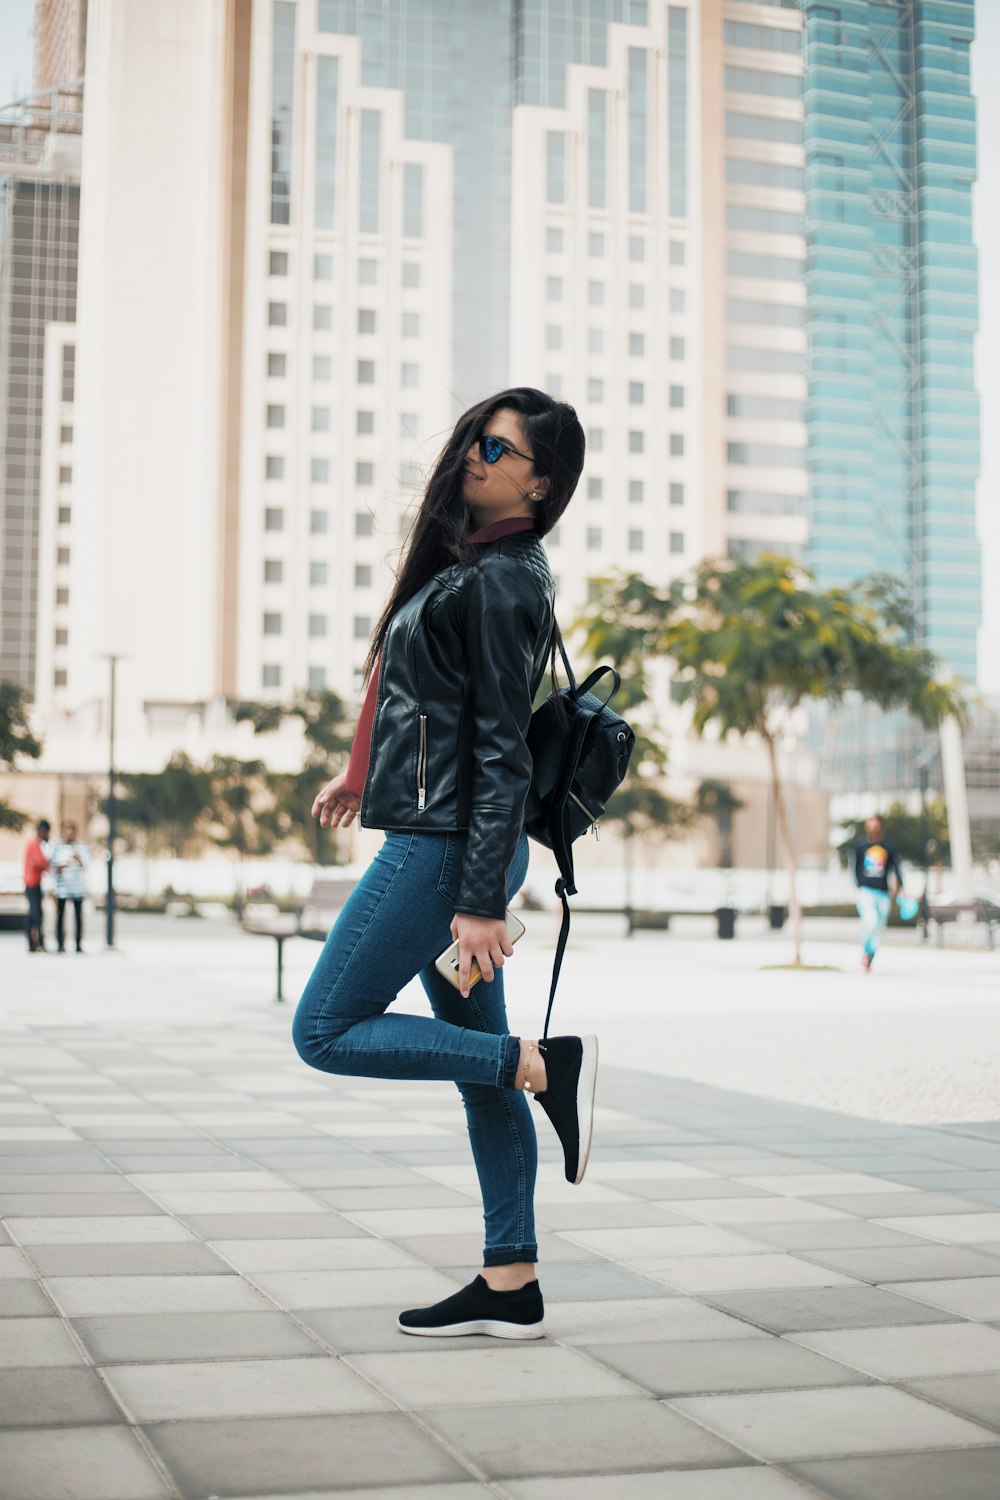 Tap svulst kontakt Woman in black jacket and blue denim jeans standing on sidewalk during  daytime photo – Free Dubai - united arab emirates Image on Unsplash